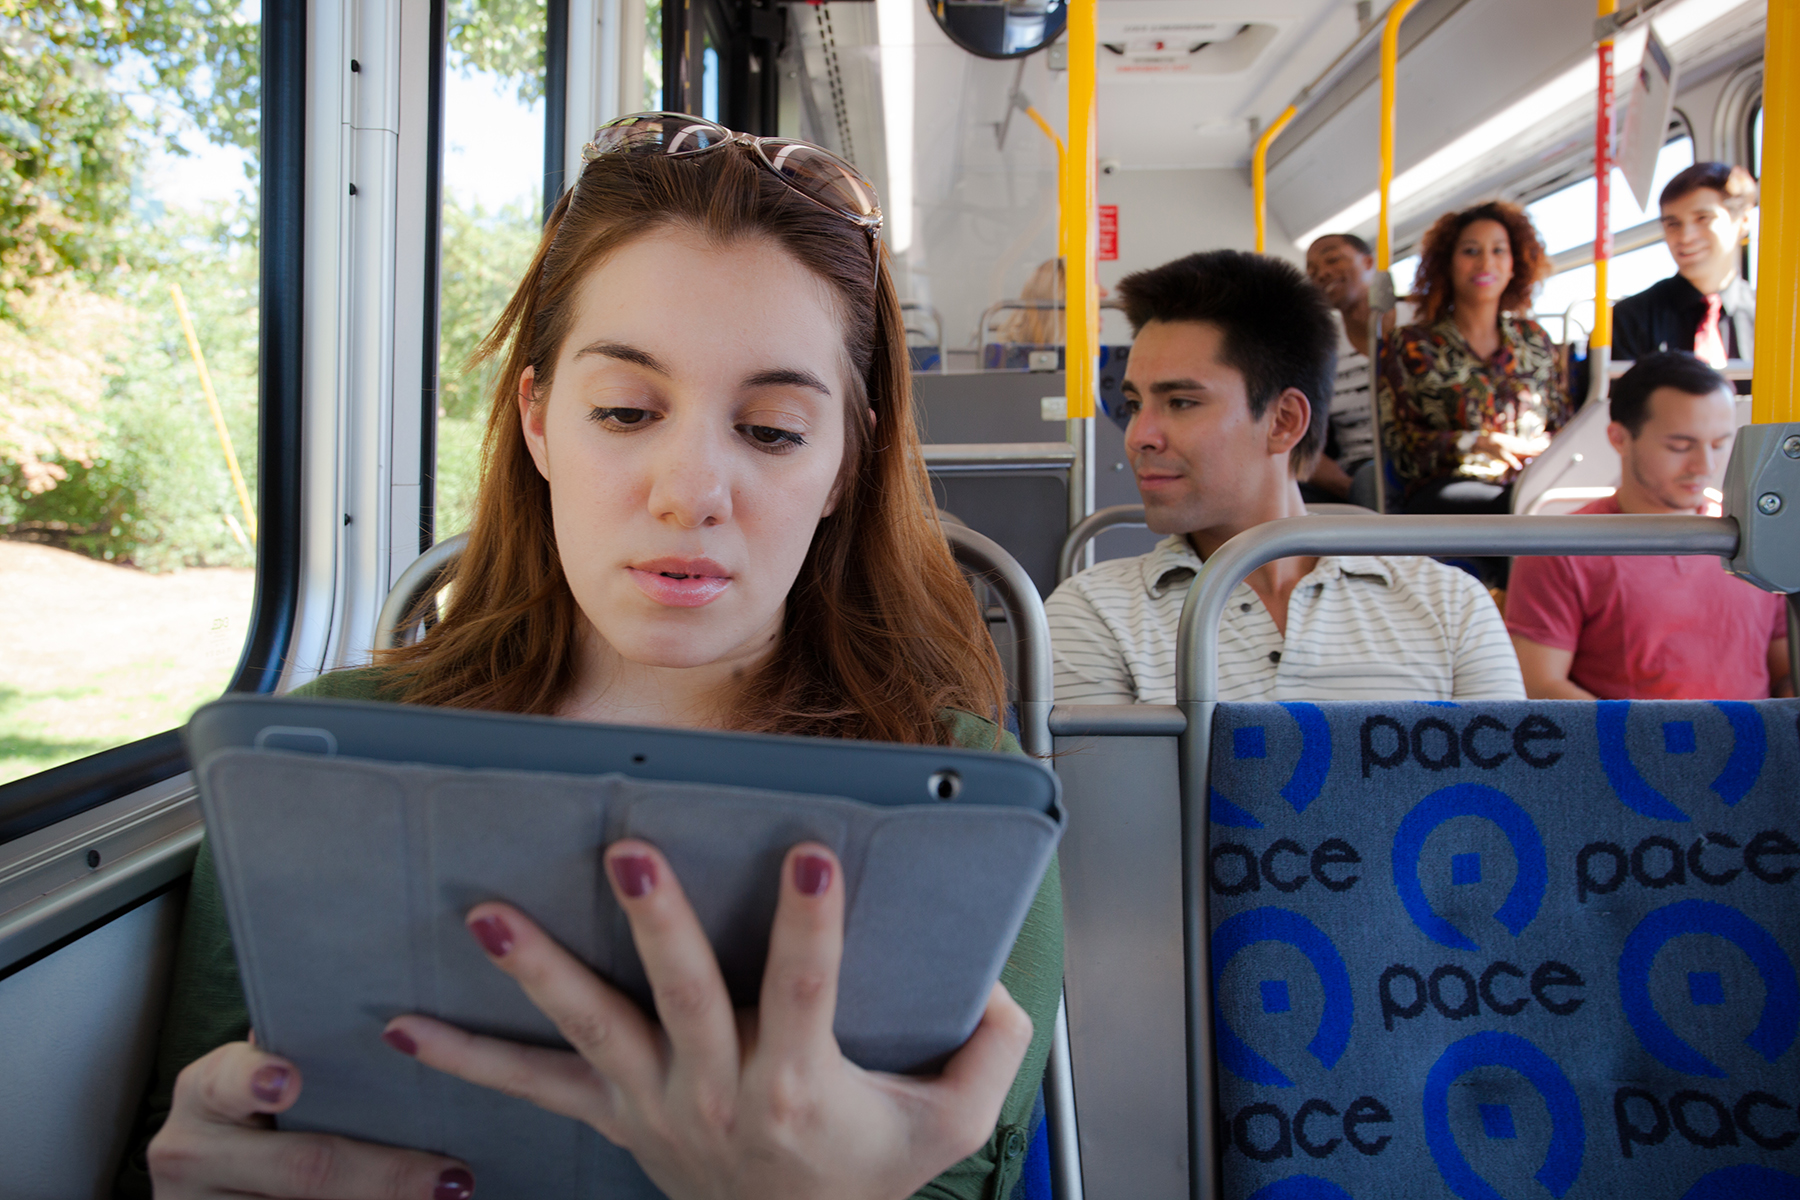 female on tablet on bus